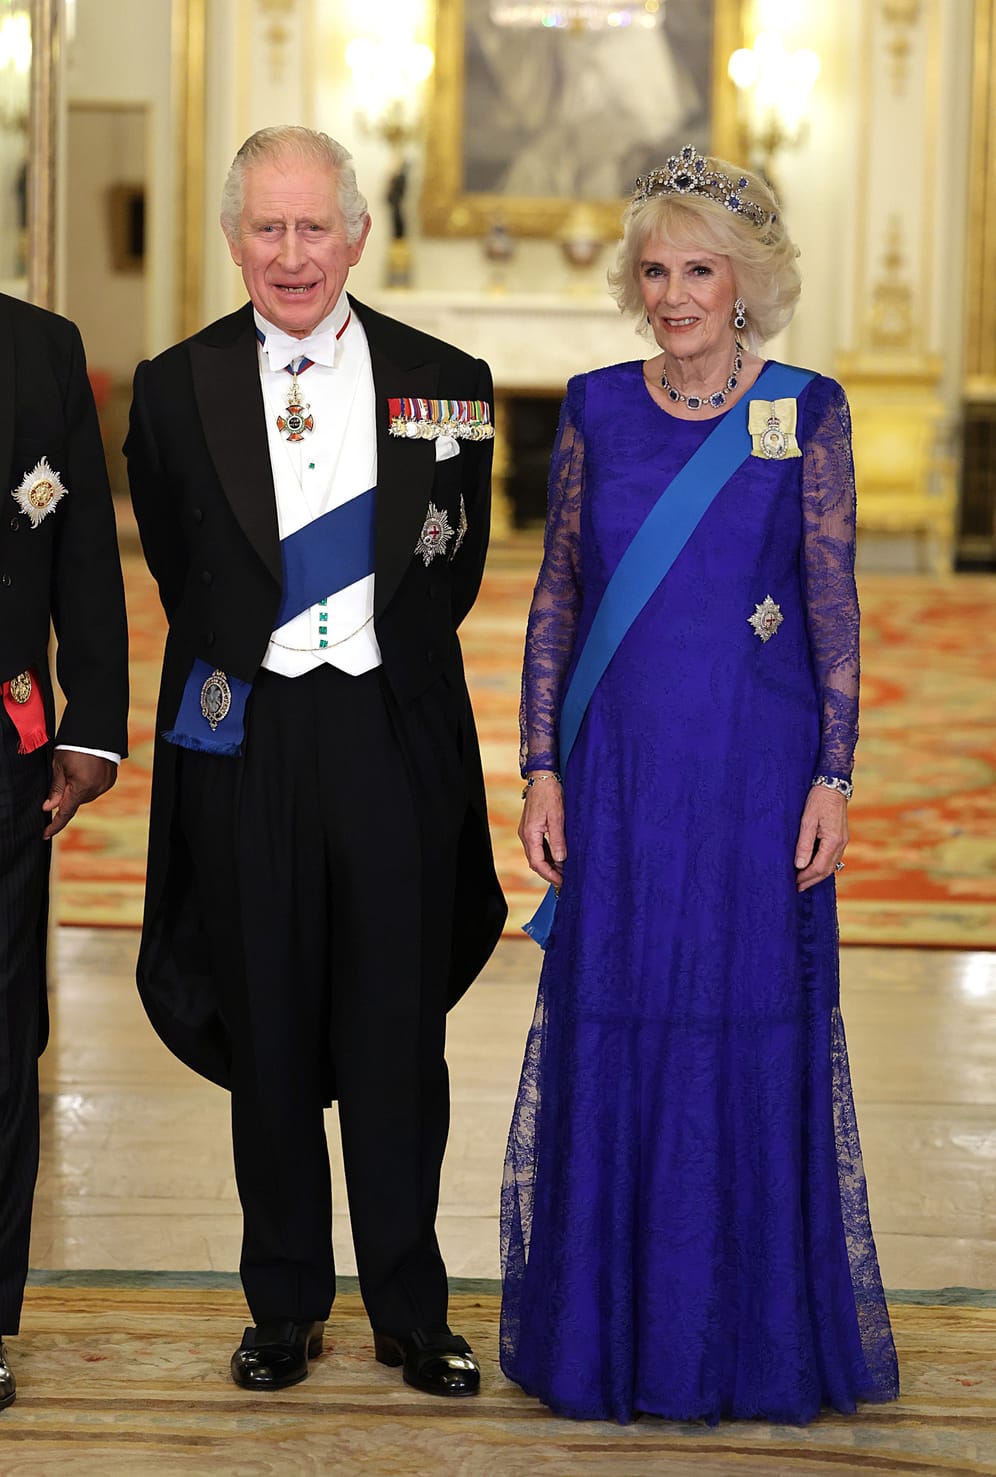 König Charles III. und Königsgemahlin Camilla